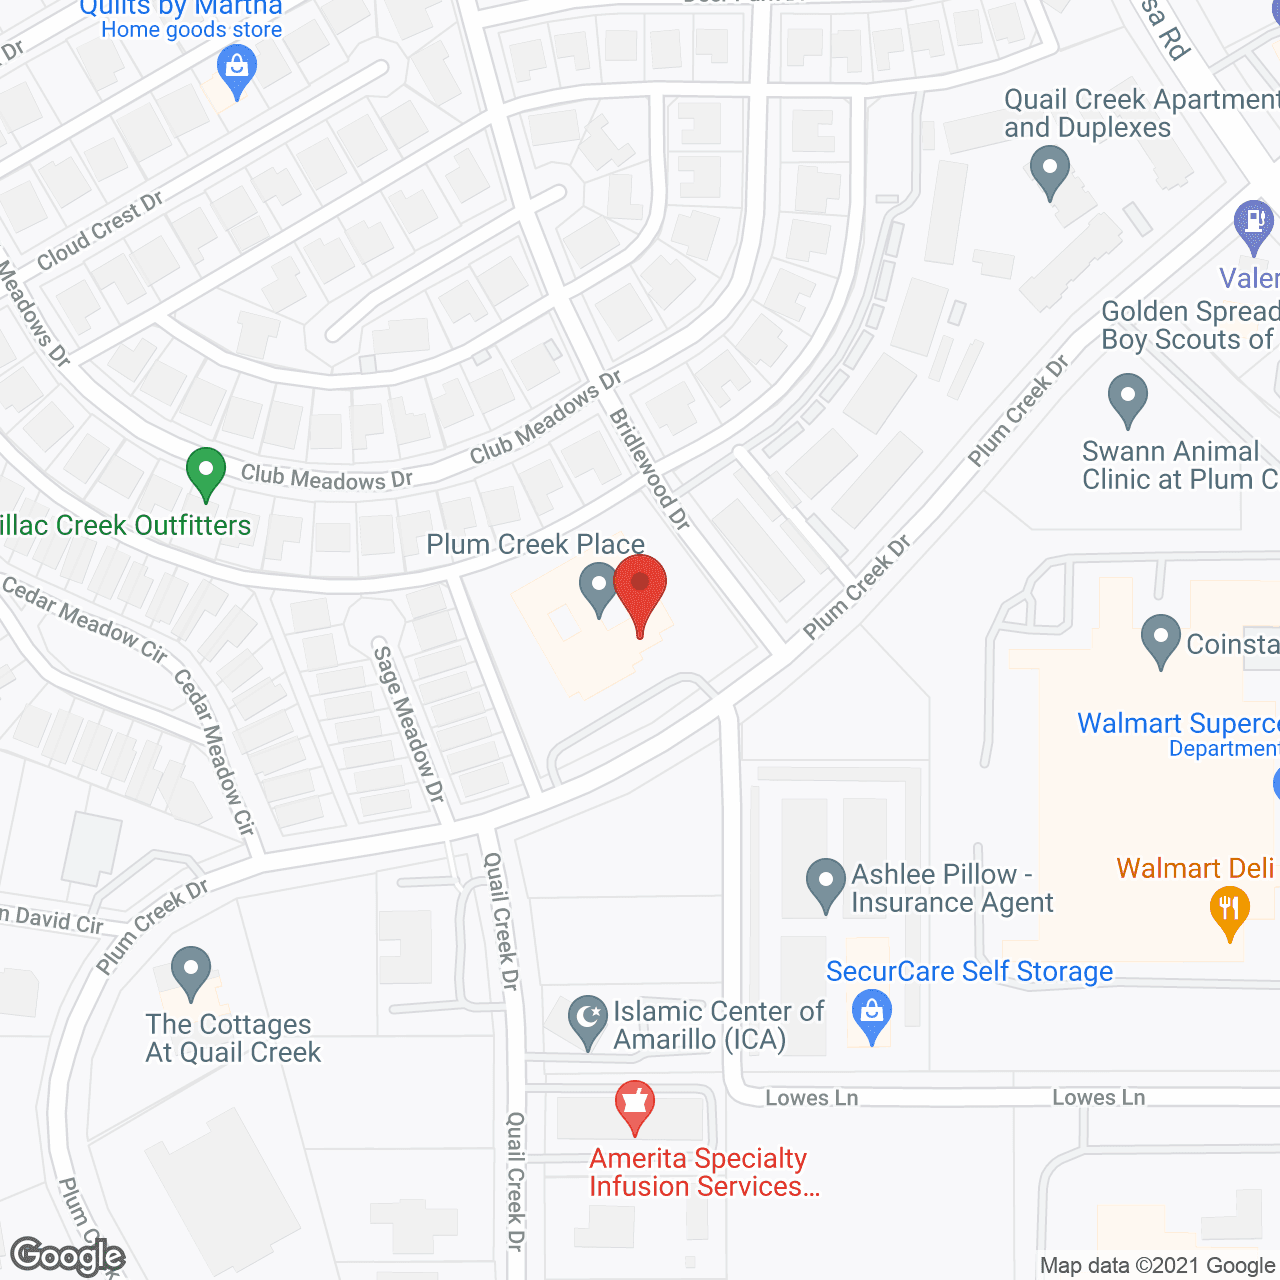 Plum Creek Place in google map